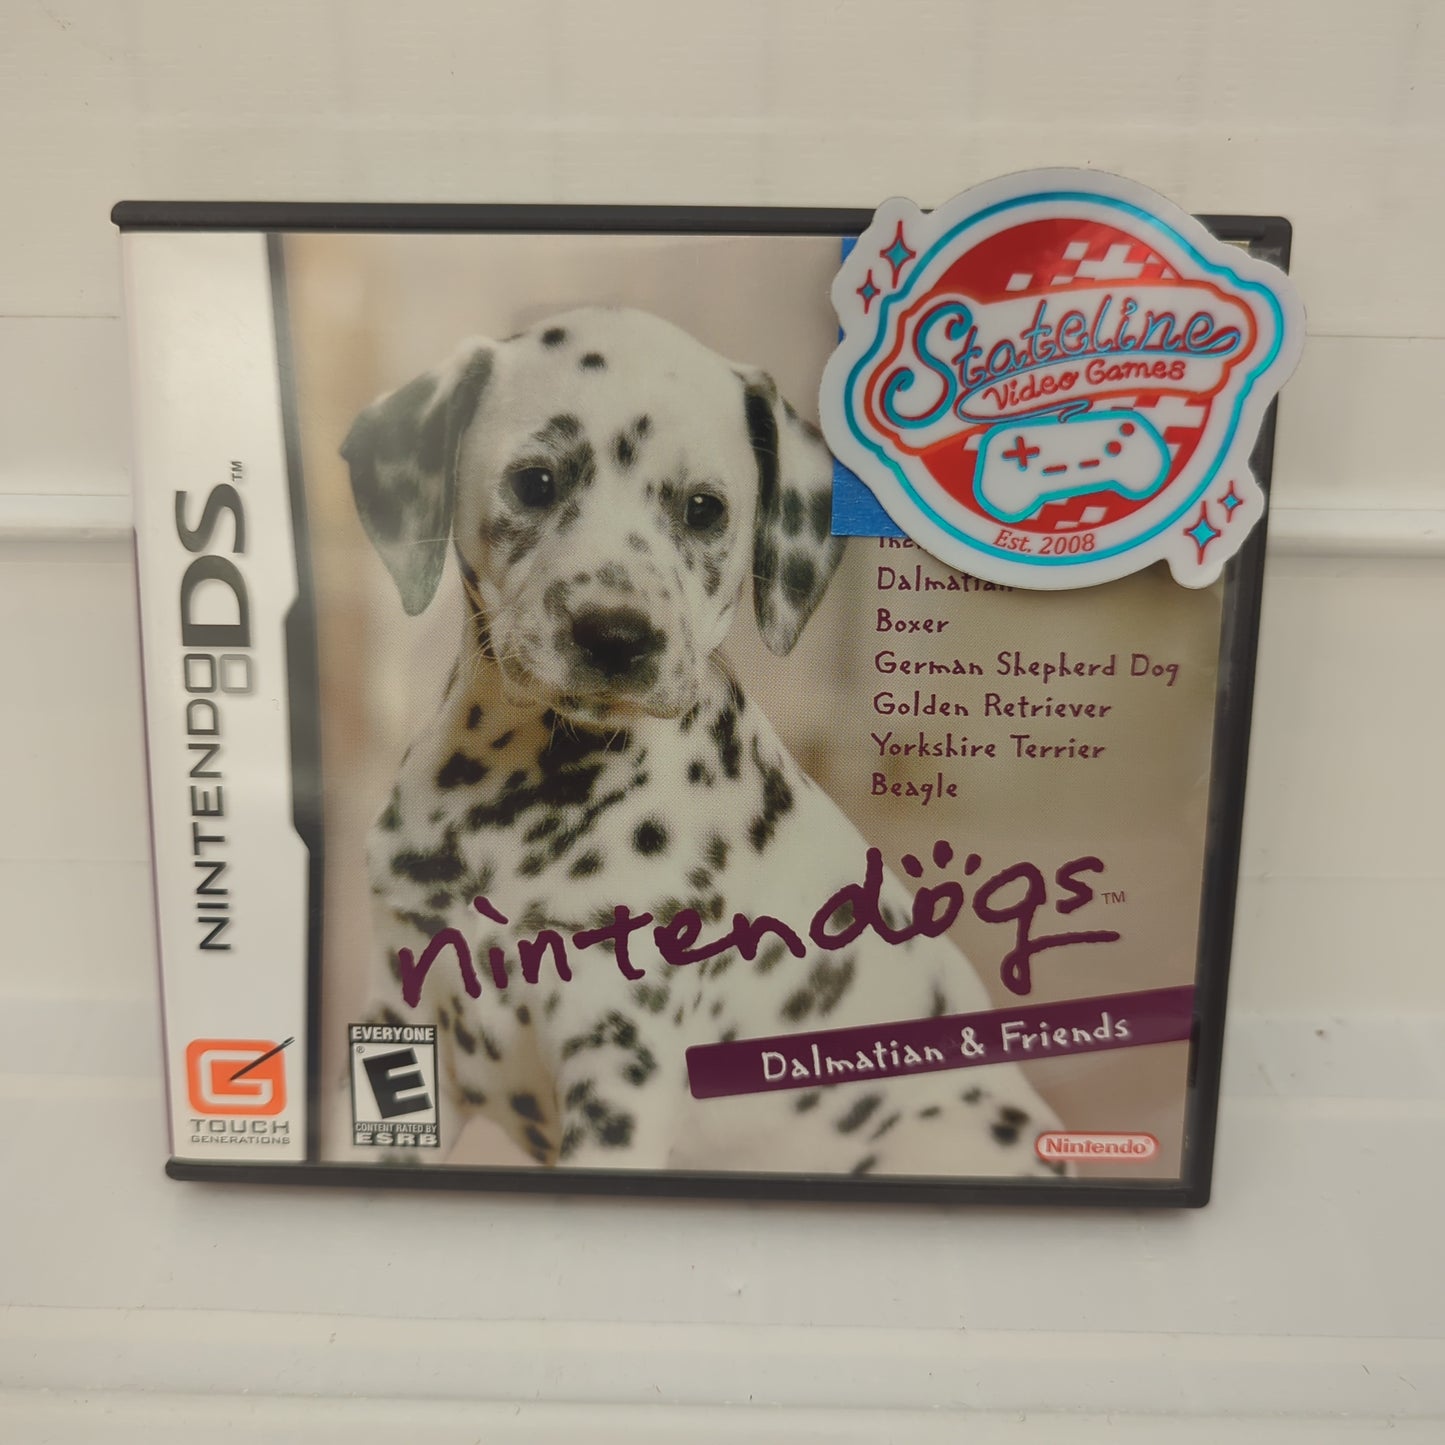 Nintendogs Dalmatian and Friends - Nintendo DS